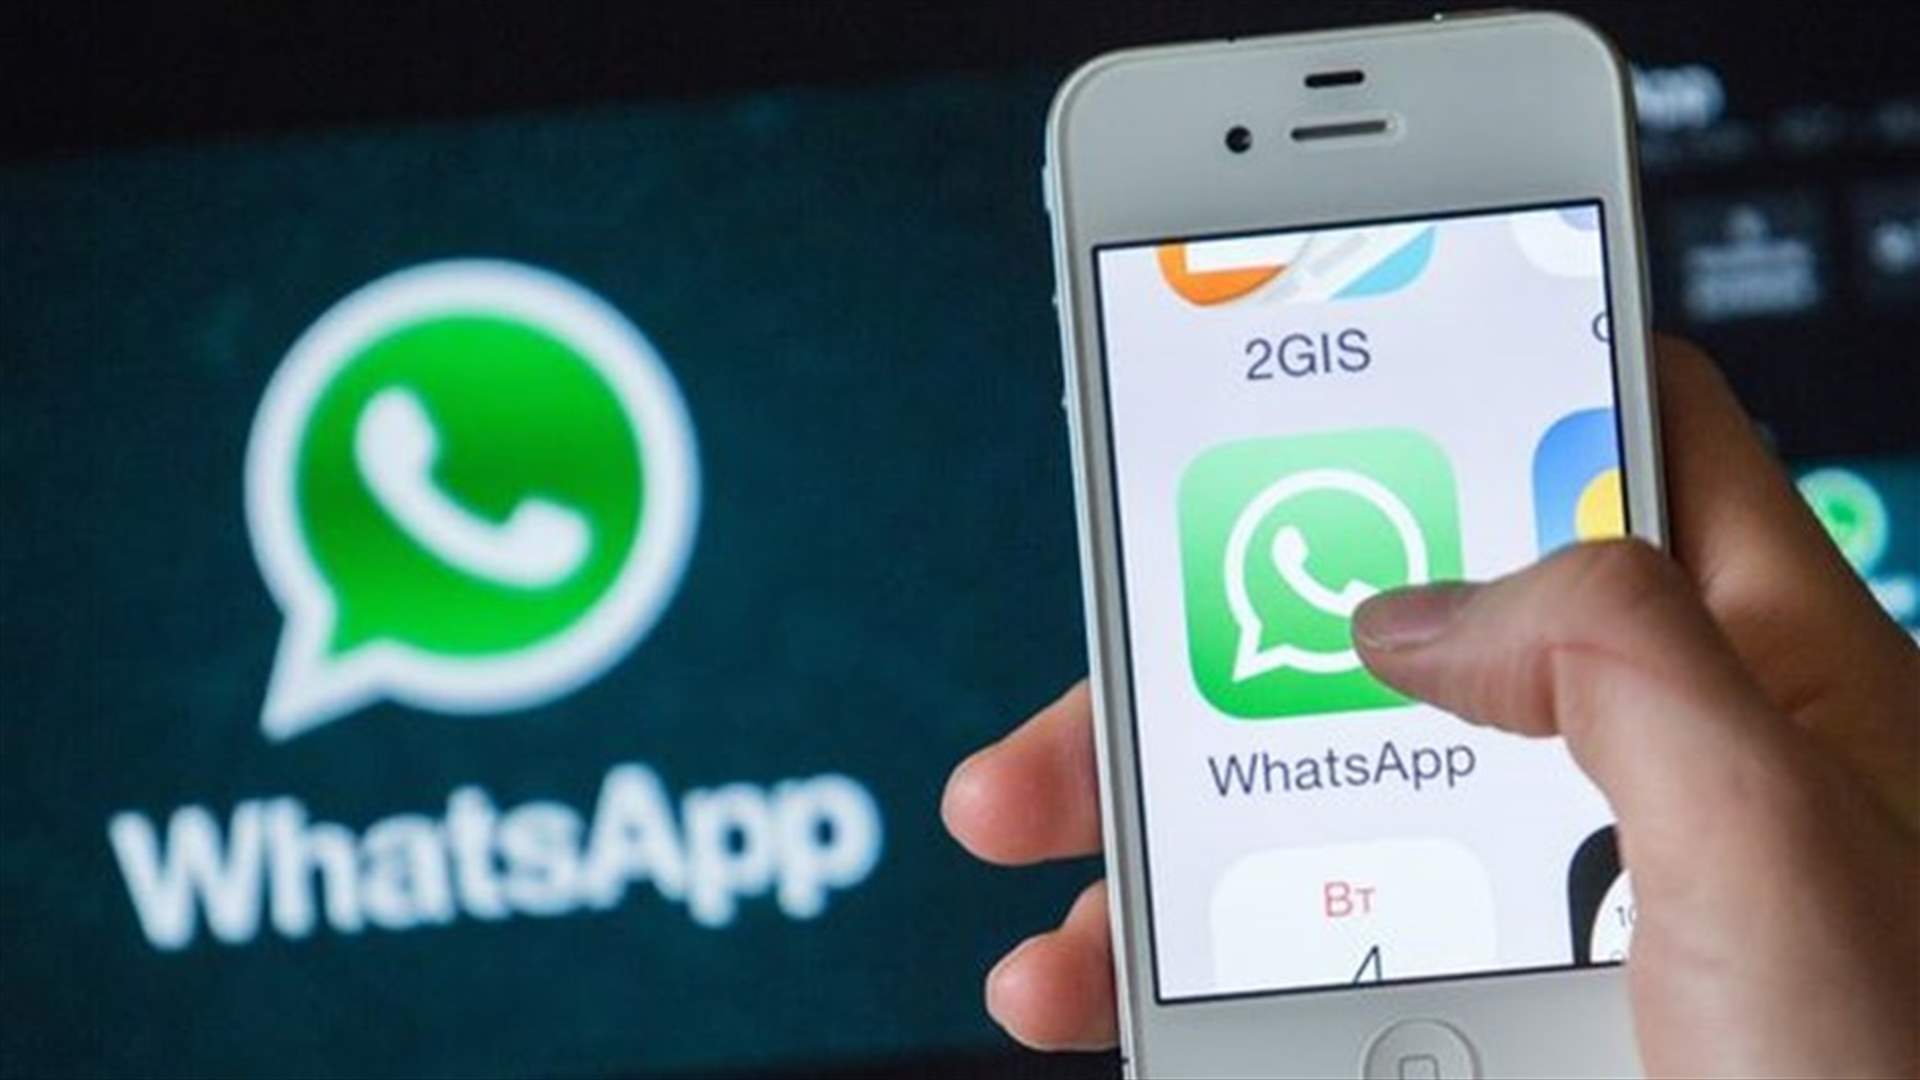 WhatsApp To Release New Update